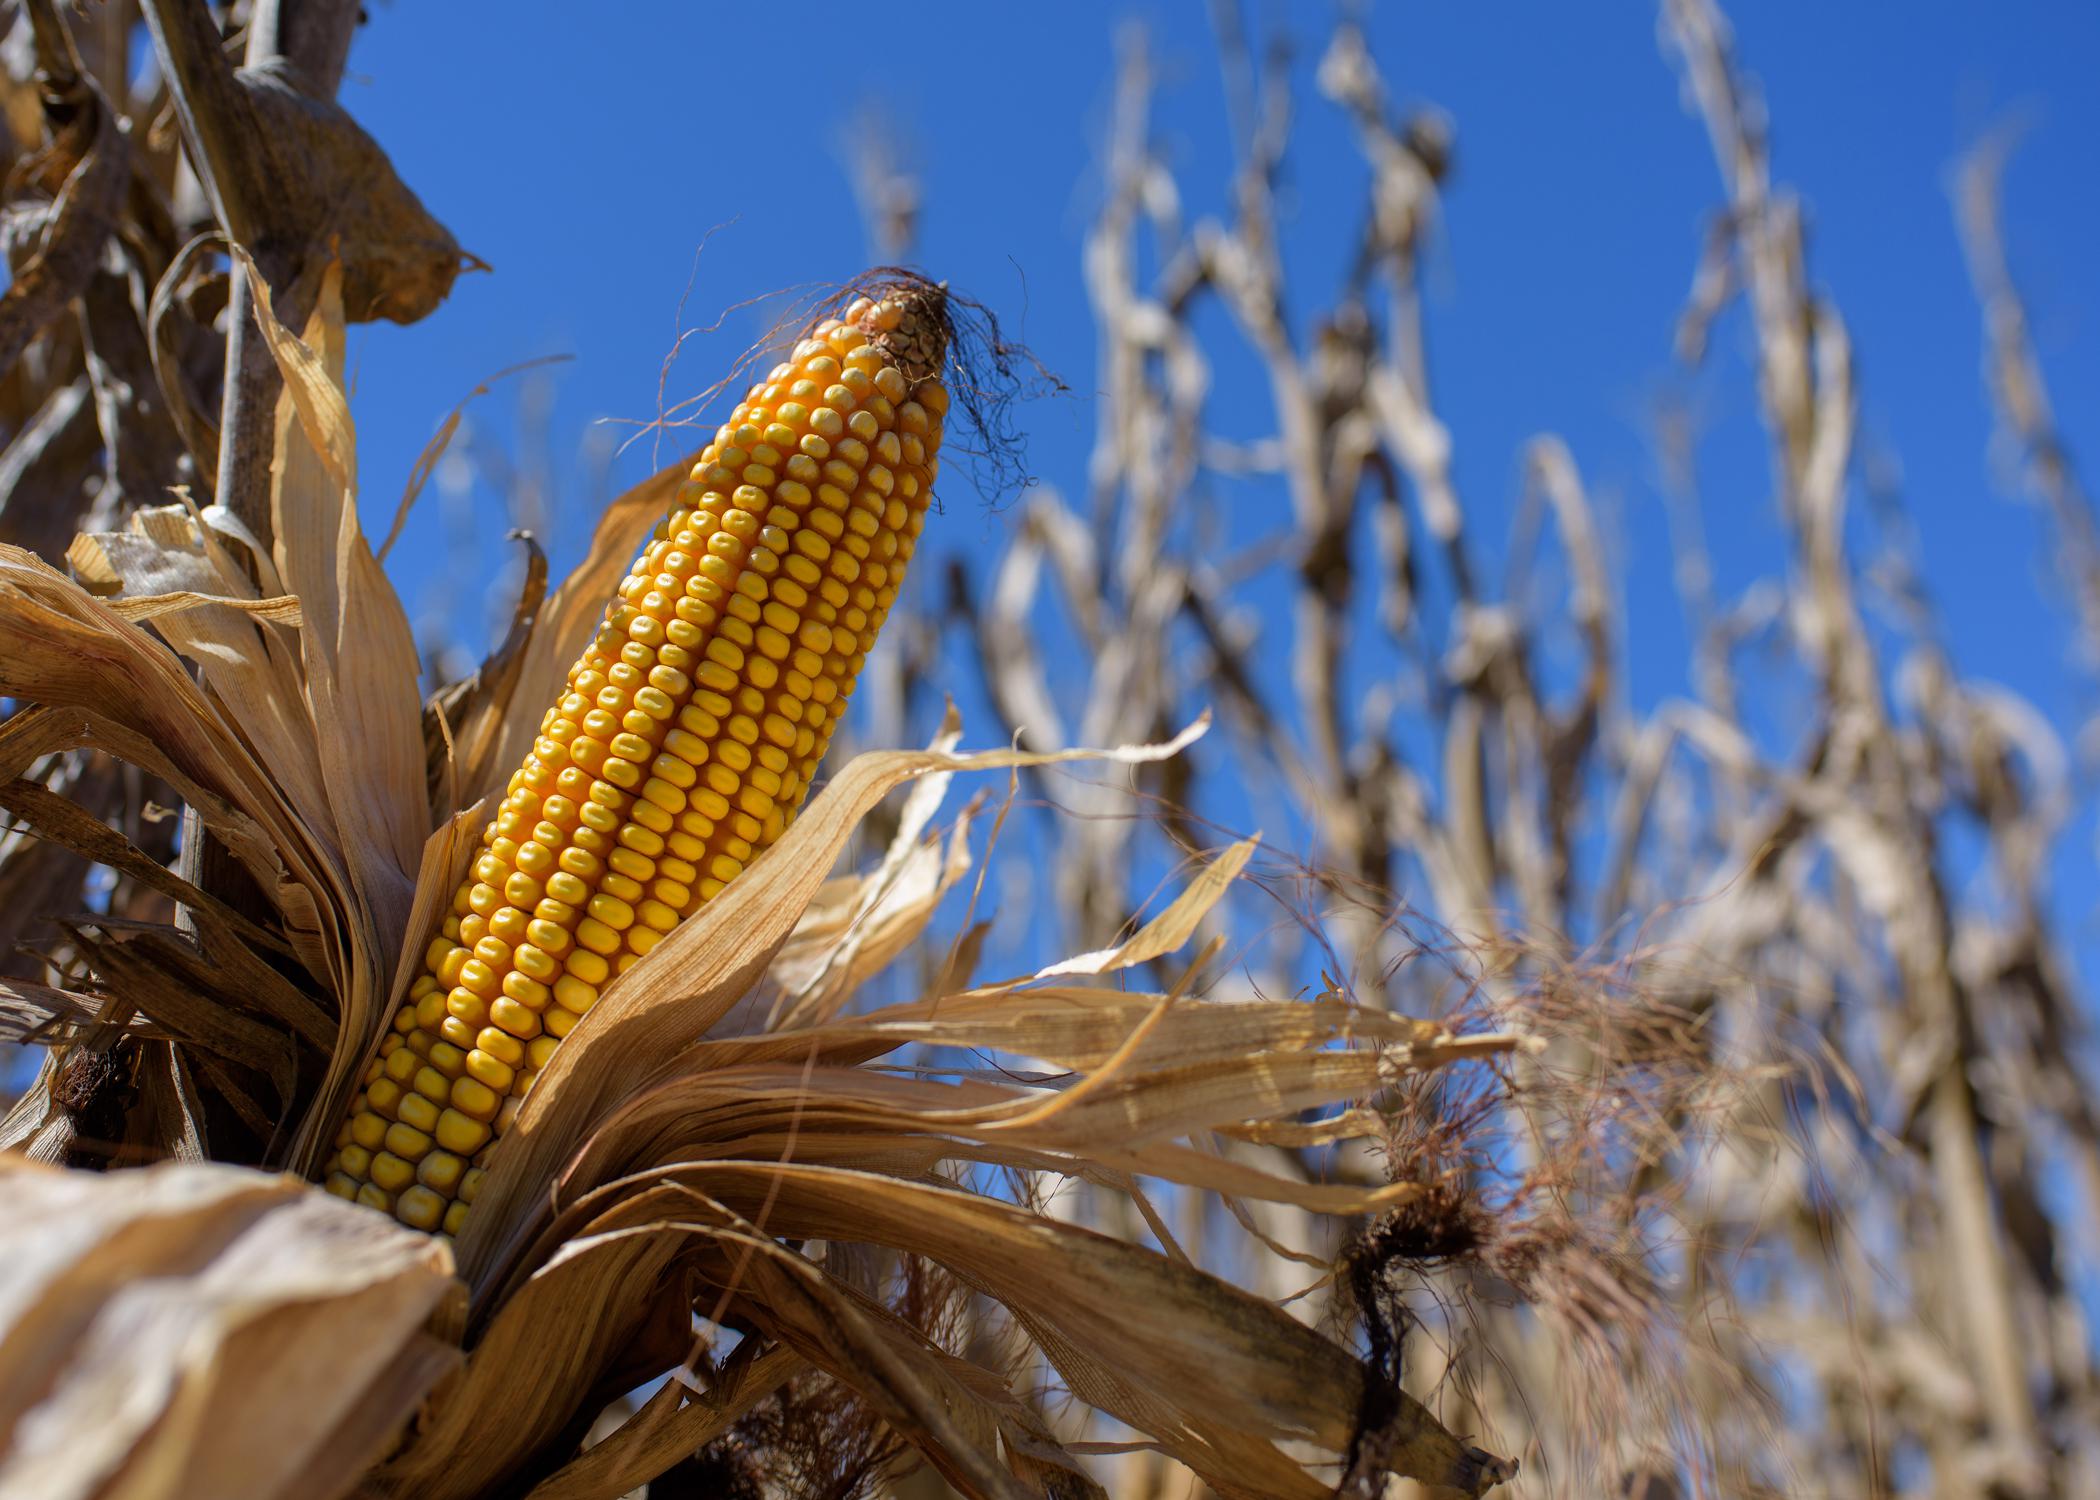 A close-up of an ear of corn.